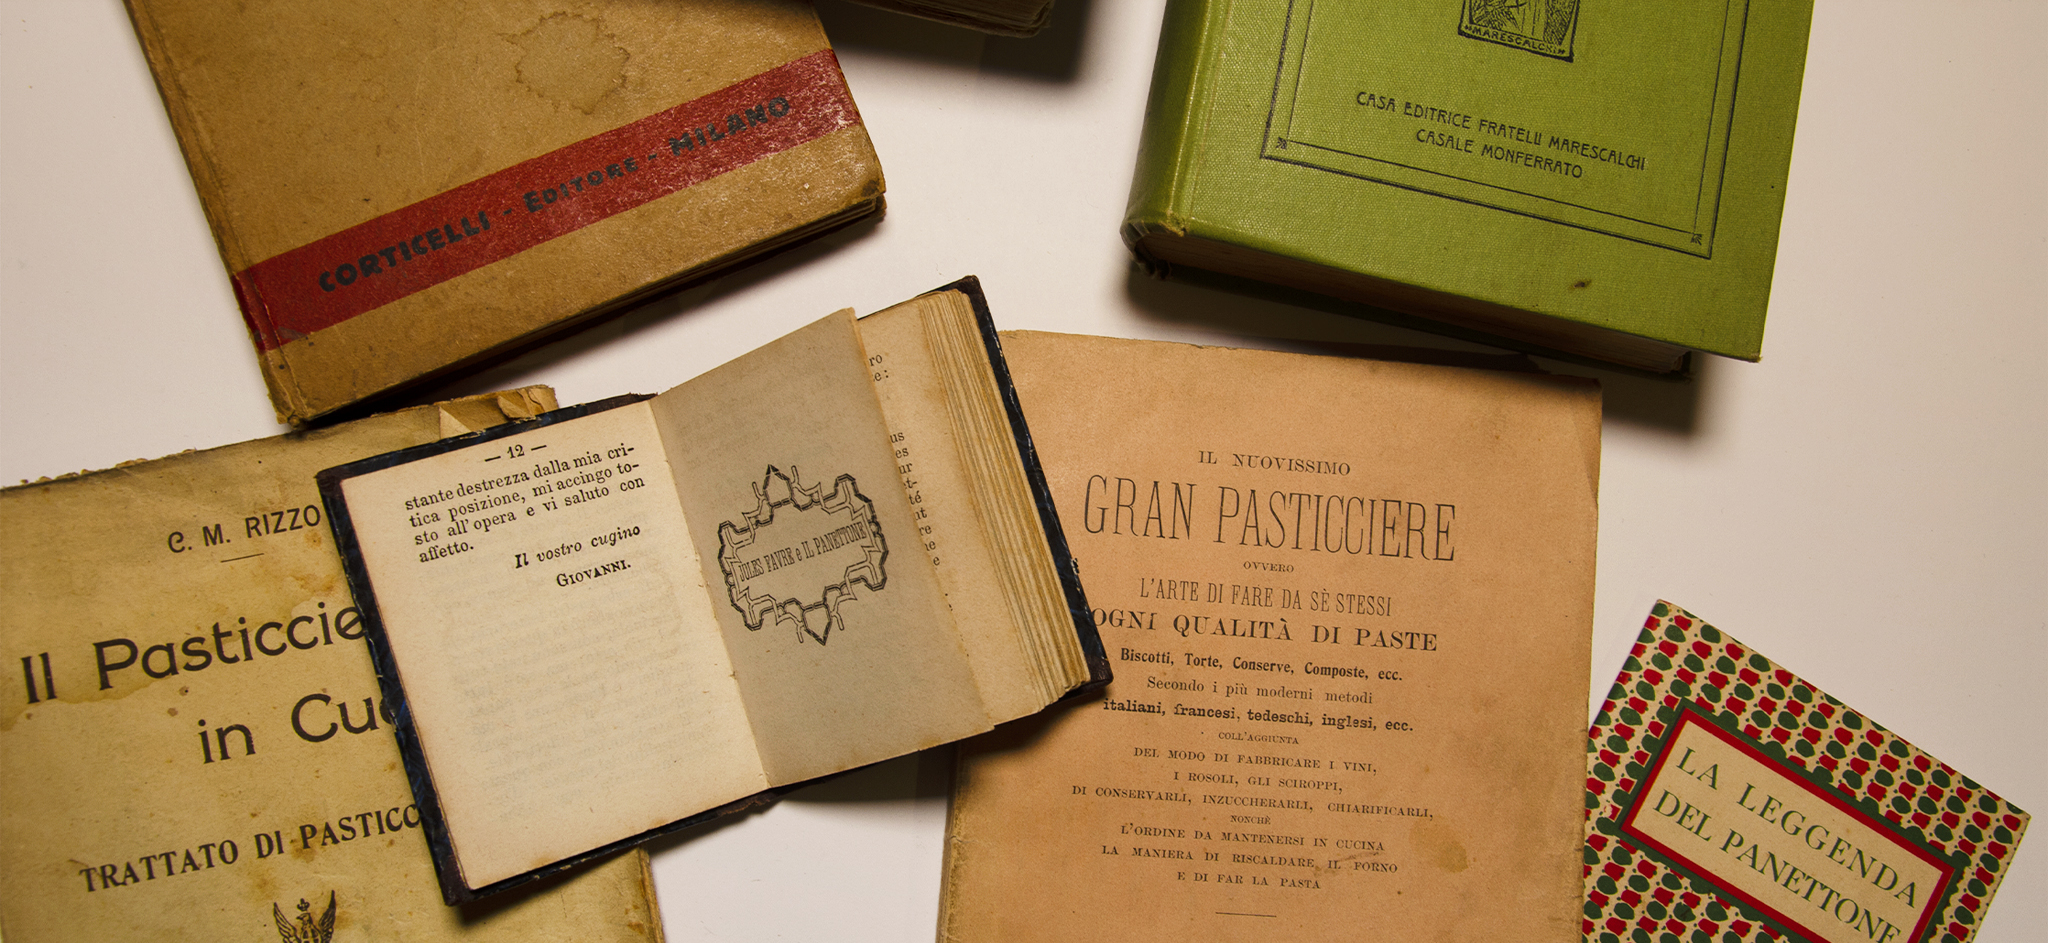 Libri antichi - dolci letture - Loison Museum